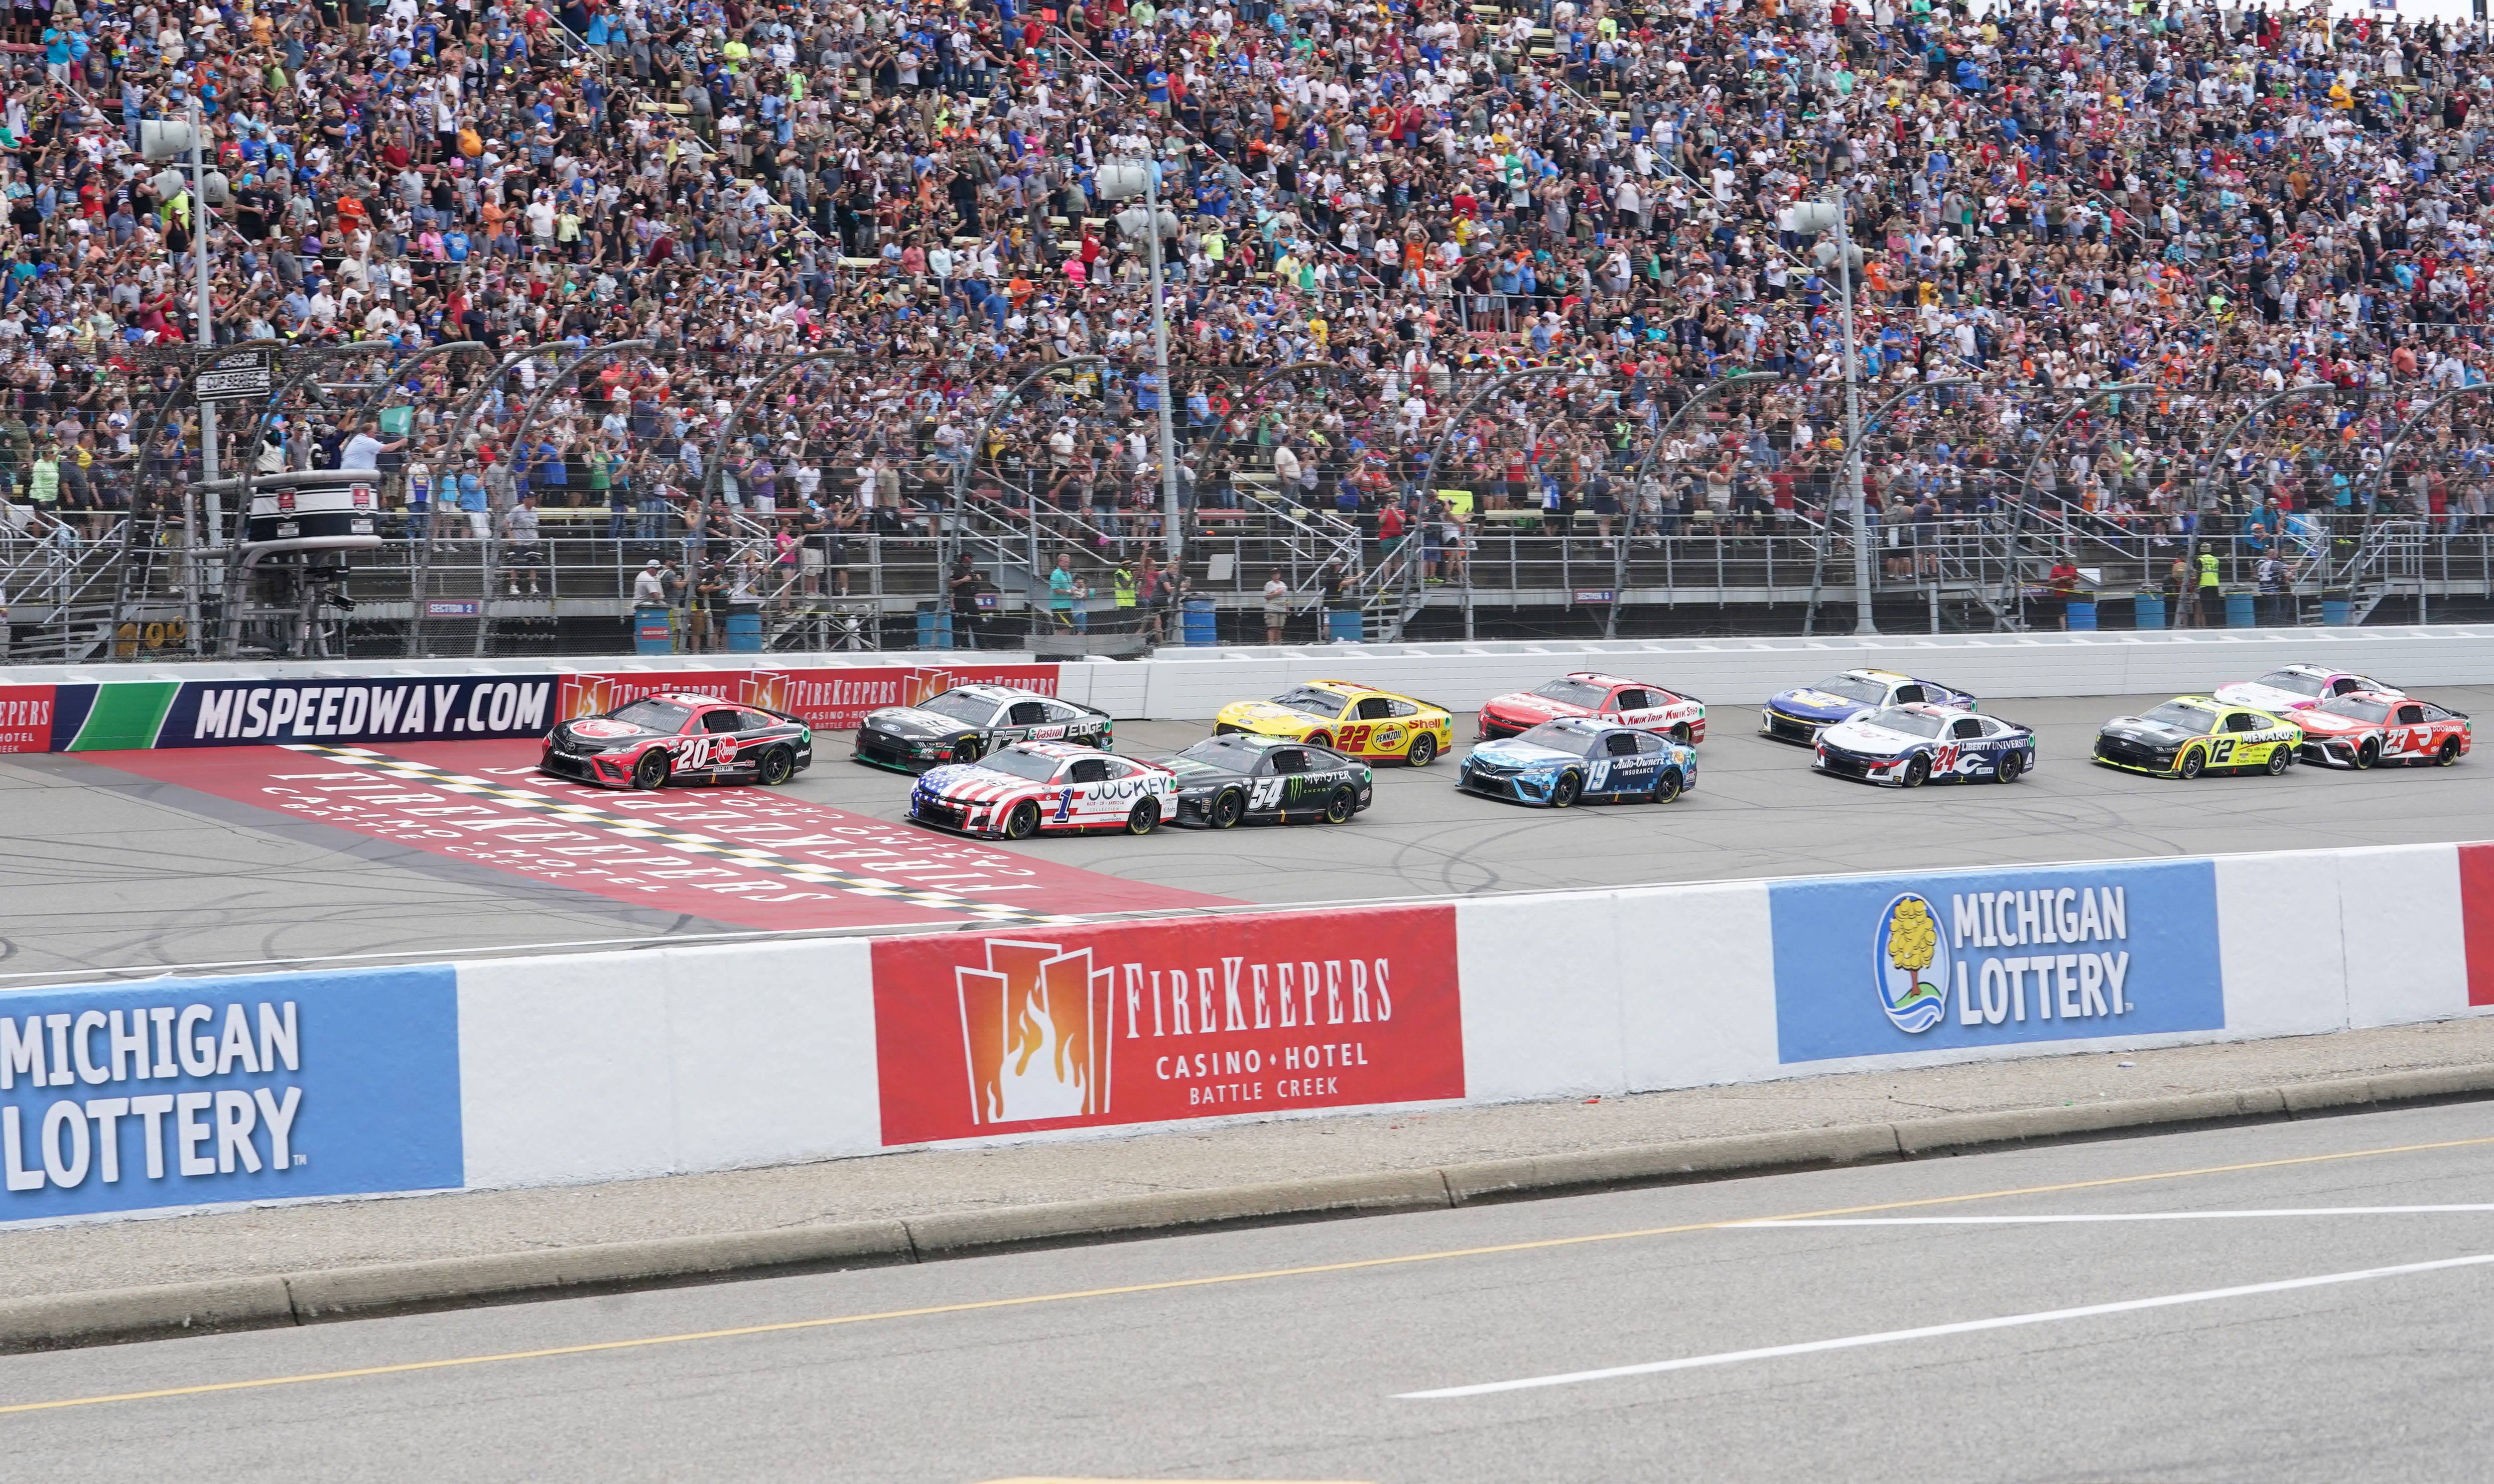 USA TODAY readers poll ranks Michigan International Speedway among best NASCAR tracks